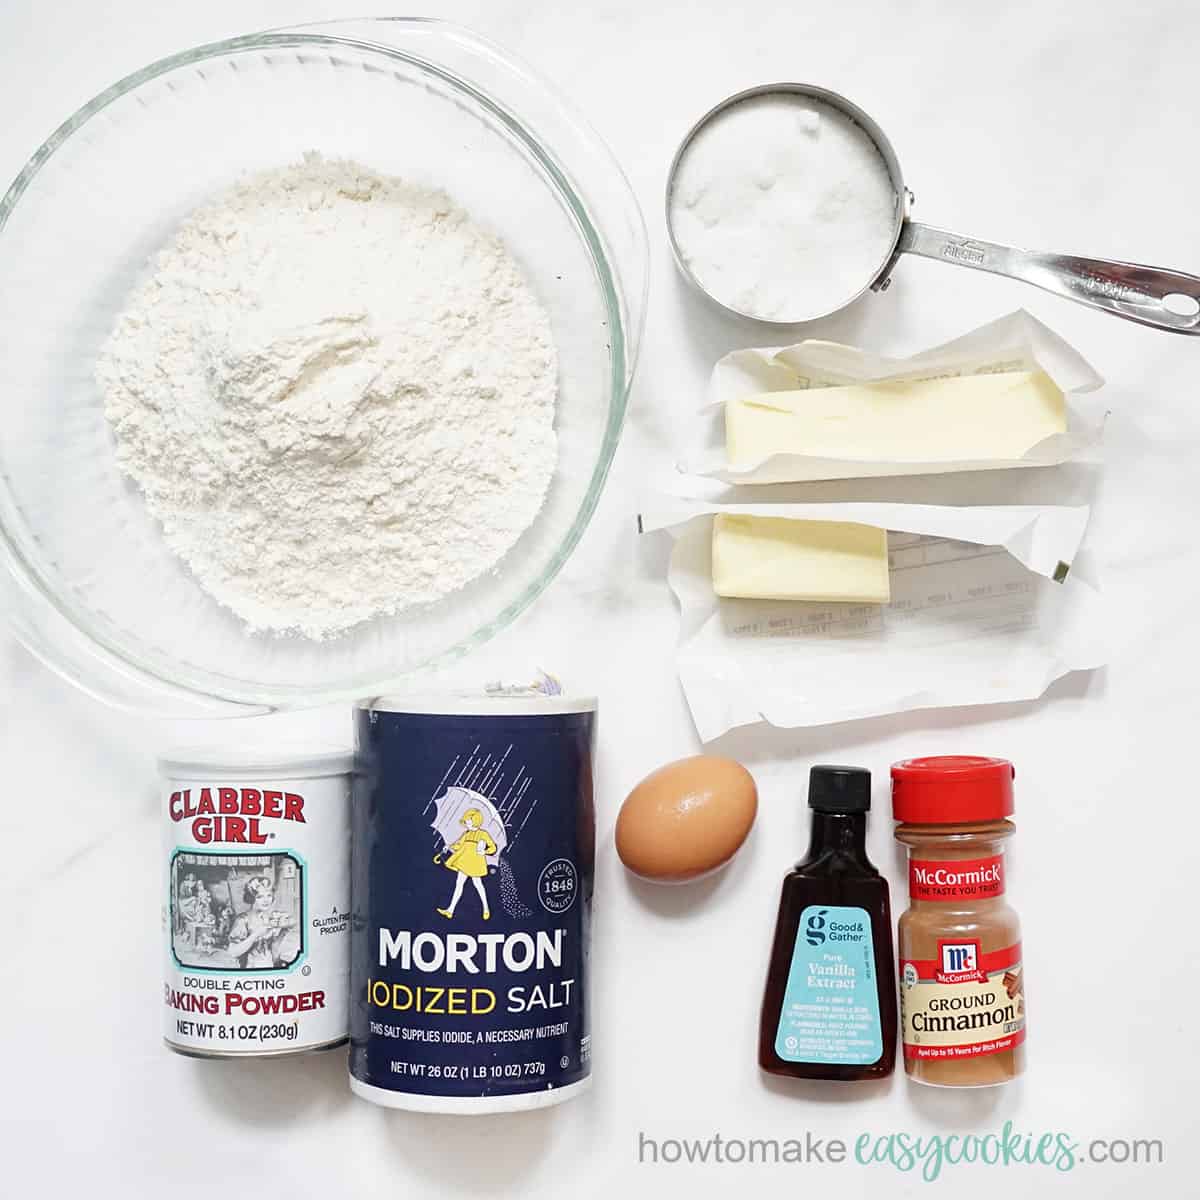 cinnamon roll cookies ingredients: flour, sugar, butter, salt, baking powder, egg, vanilla, cinnamon